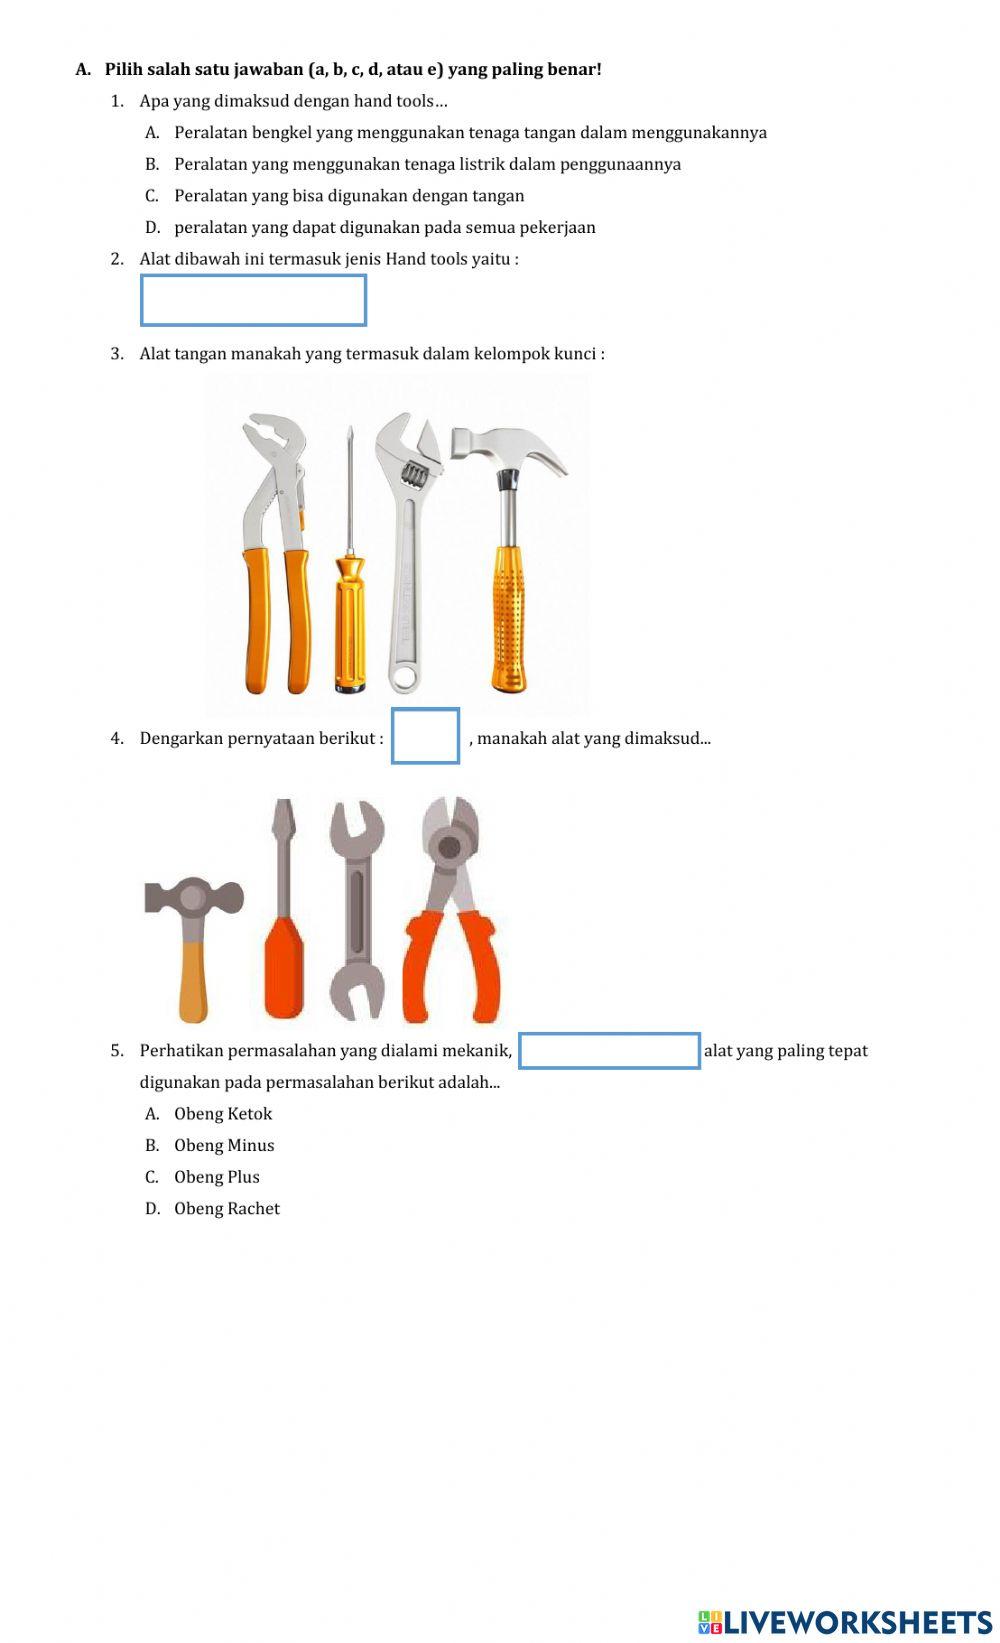 Hand tools interactive worksheet